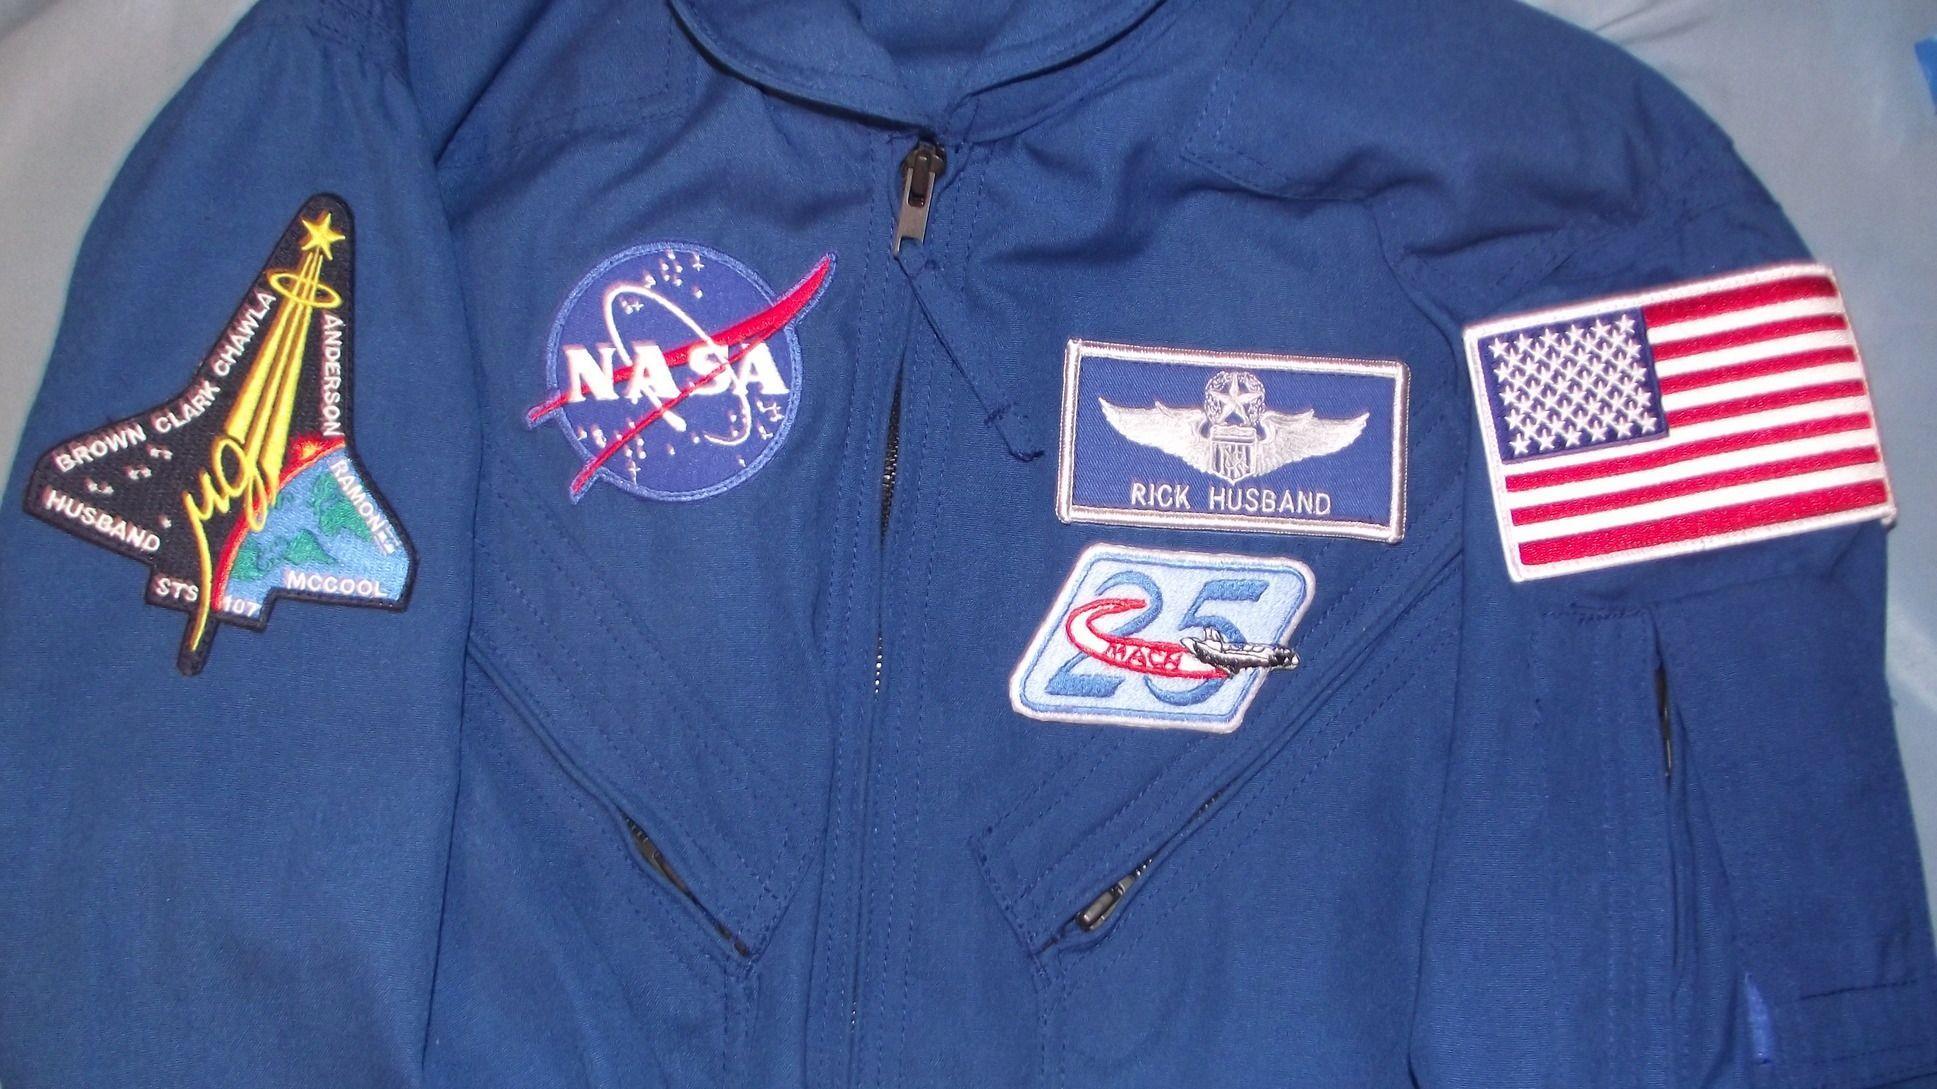 NASA Flight Suit Logo - nasa space flight suit logo patches - Google Search | Branding ...